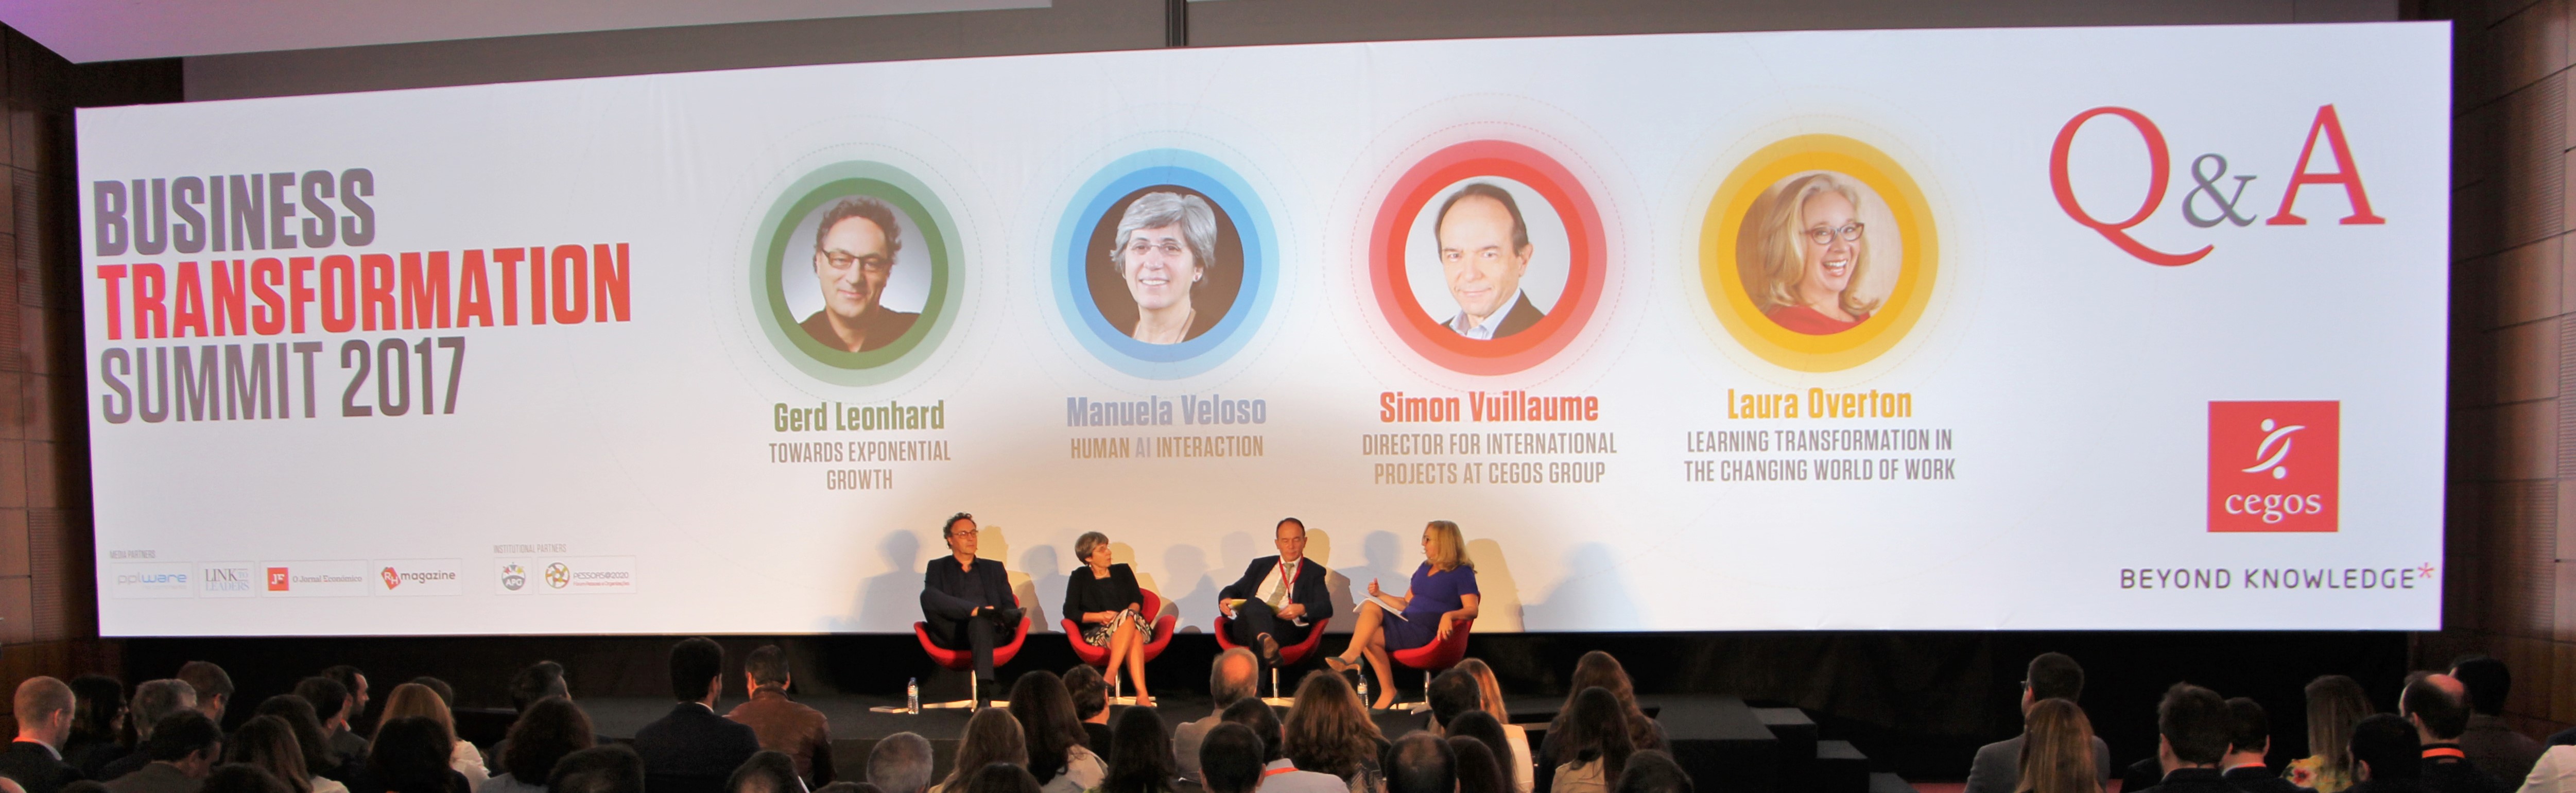 Gerd Leonhard, Manuela Veloso, Simon Vuillaume and Laura Overton at the Business Transformation Summit 2017 - Lisbon